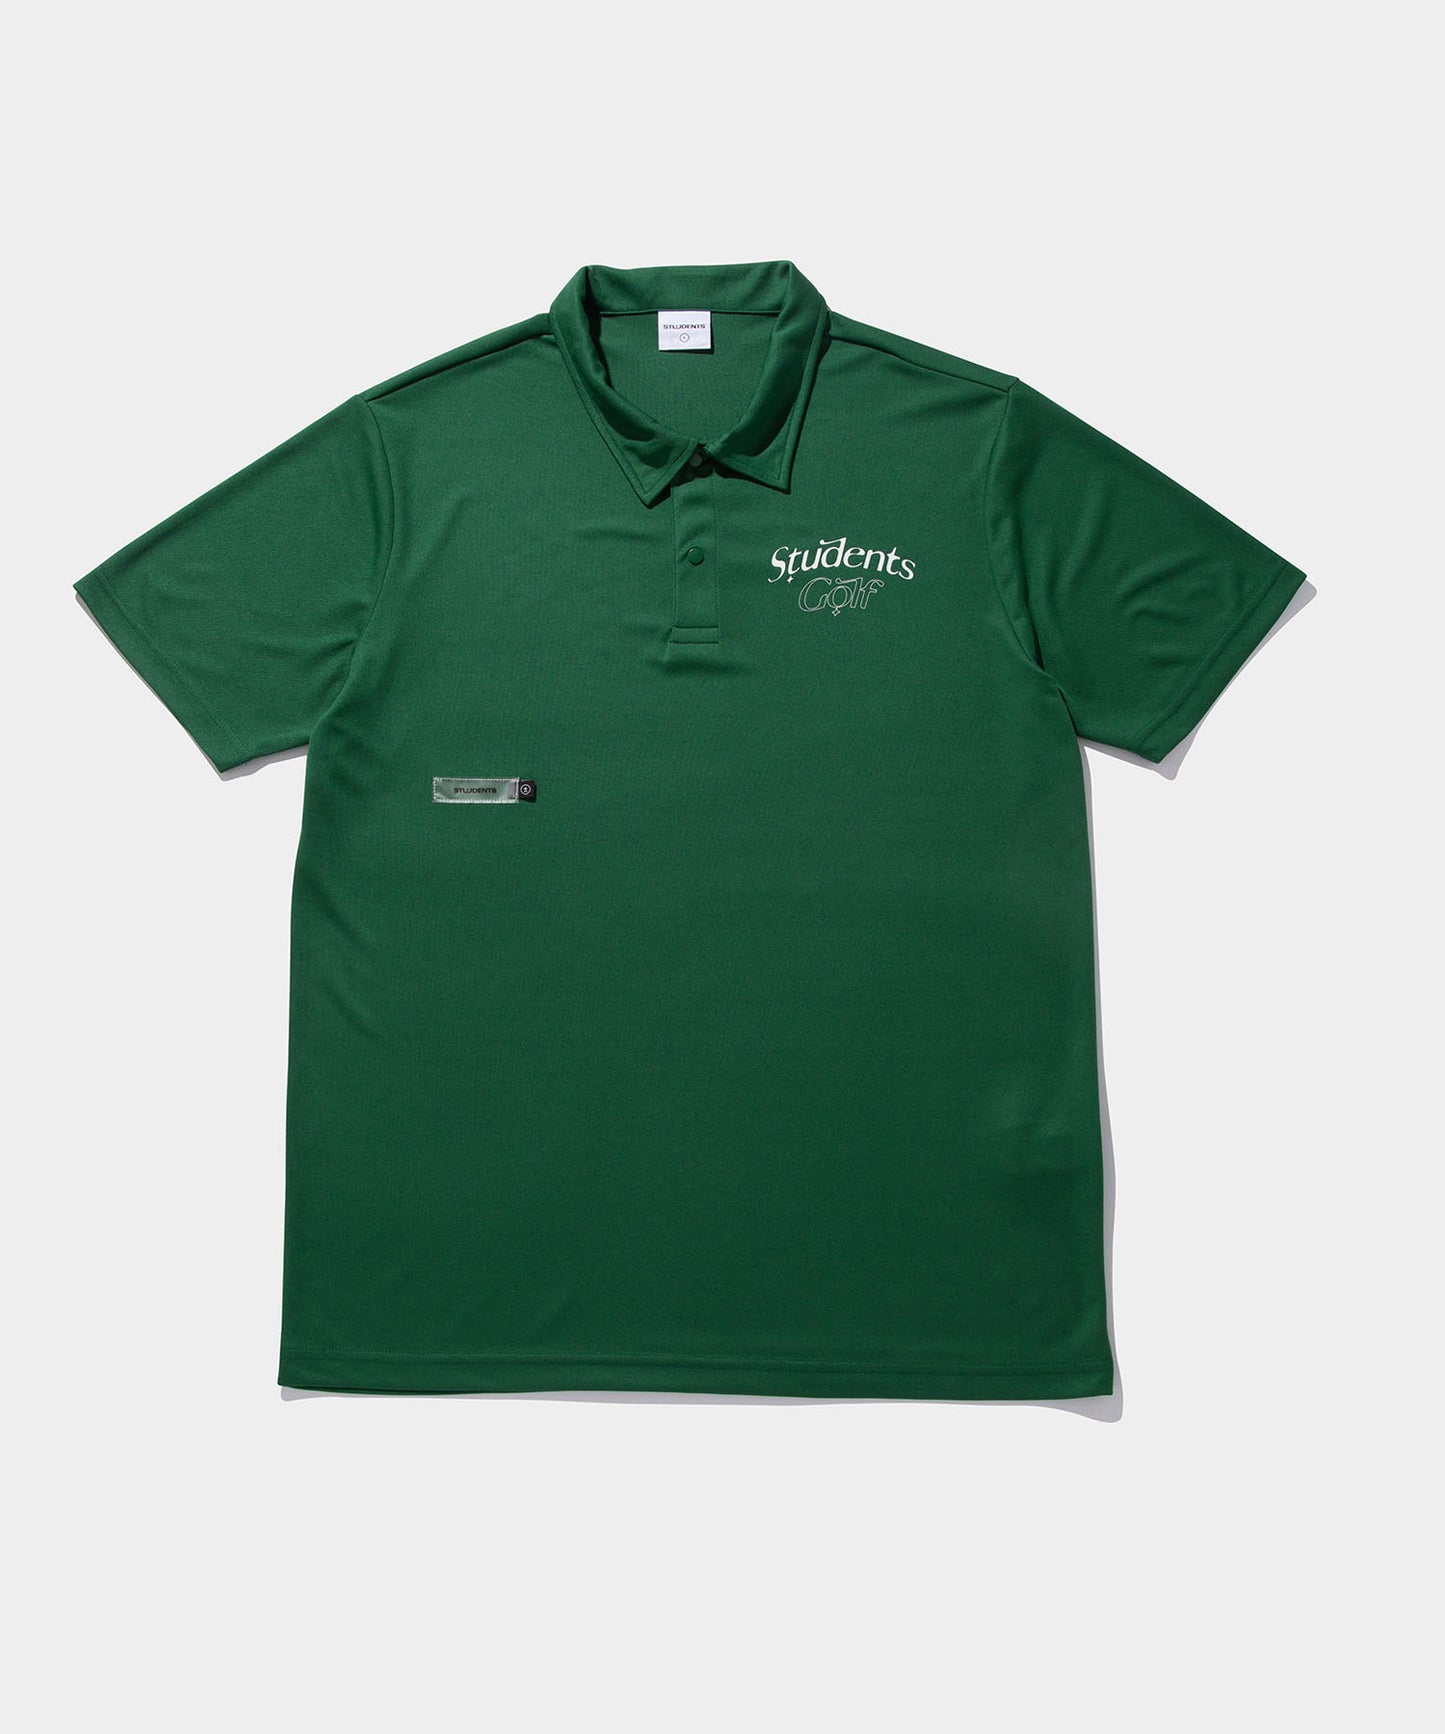 Students Golf Chapman Poly Polo Shirt GREEN